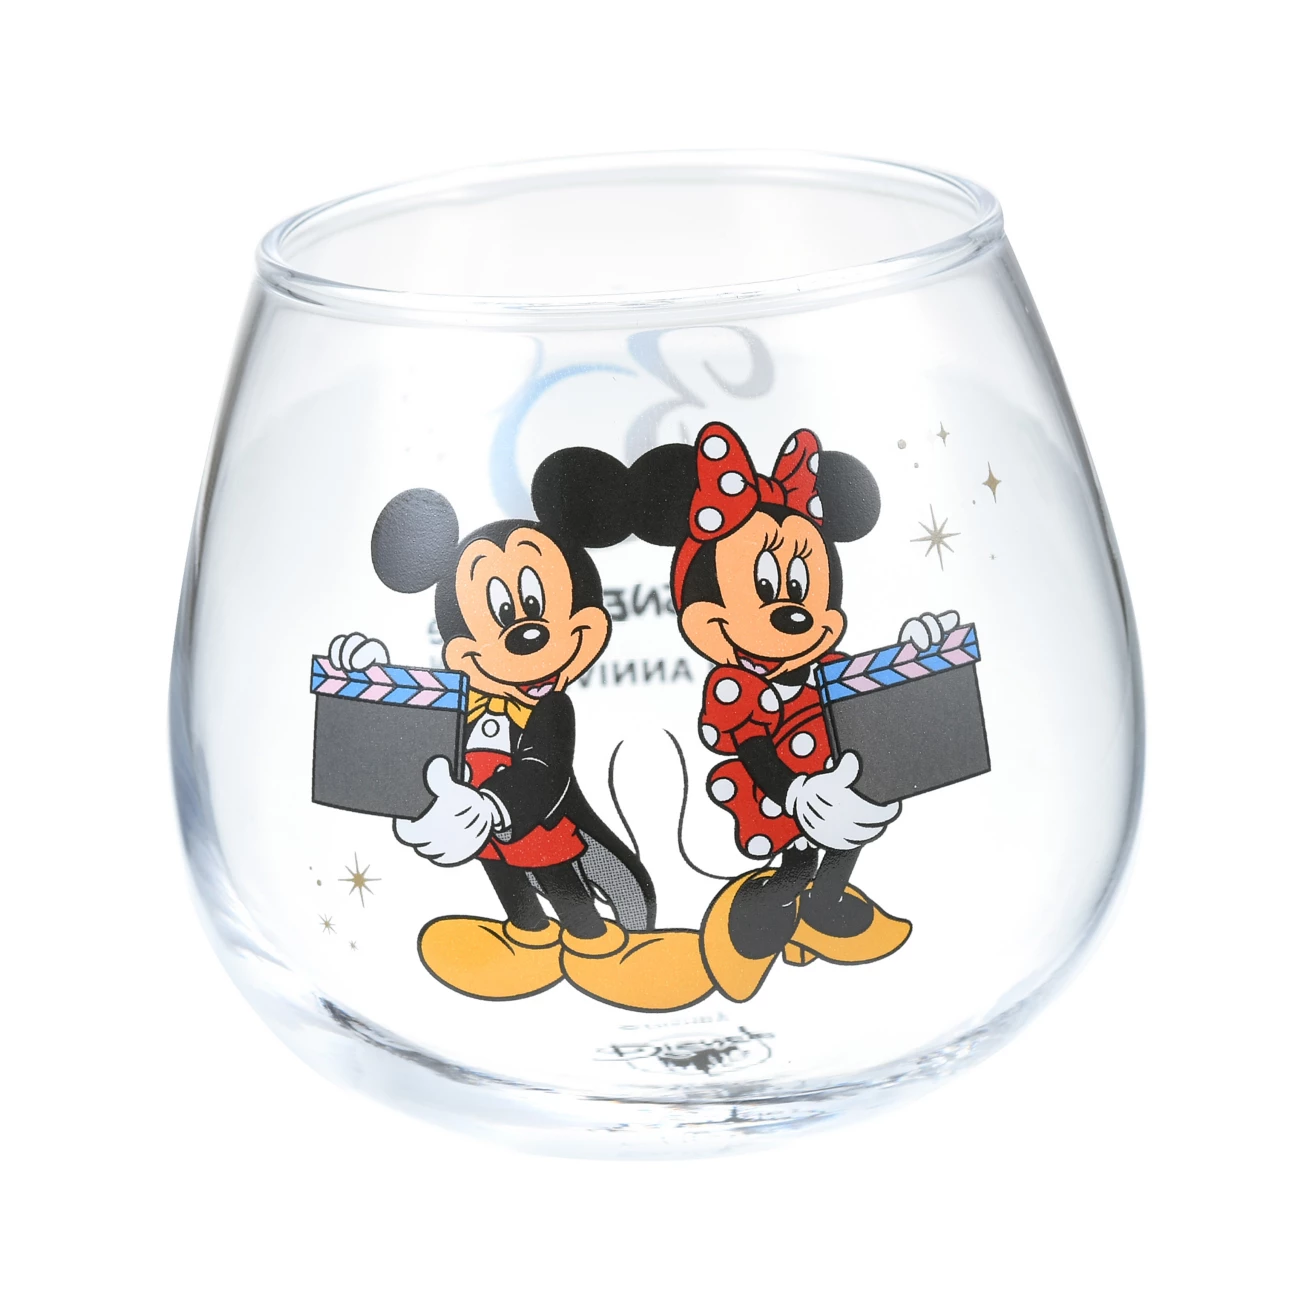 SDJ - Disney Store Japan 30TH Anniversary - Cup